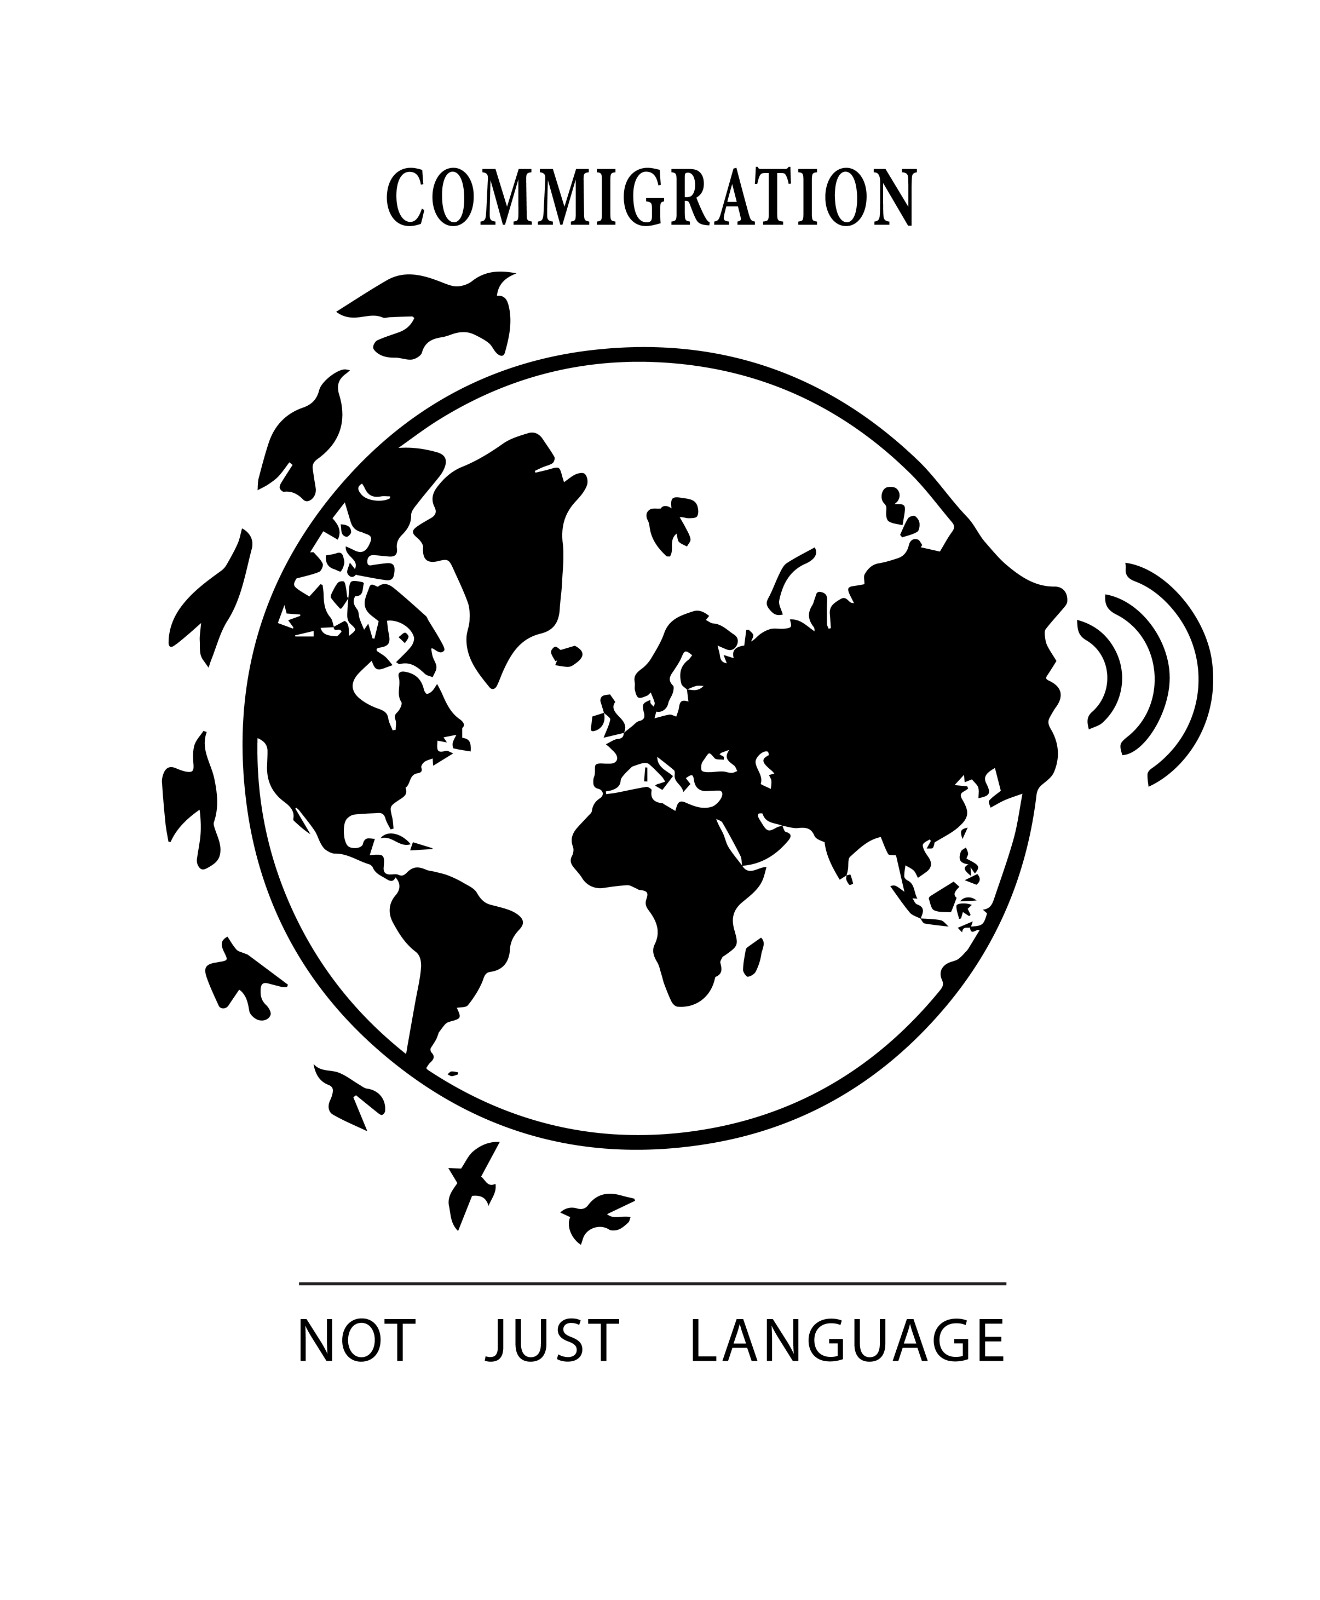 Commigration - Türkçe e-Öğrenme Modülü